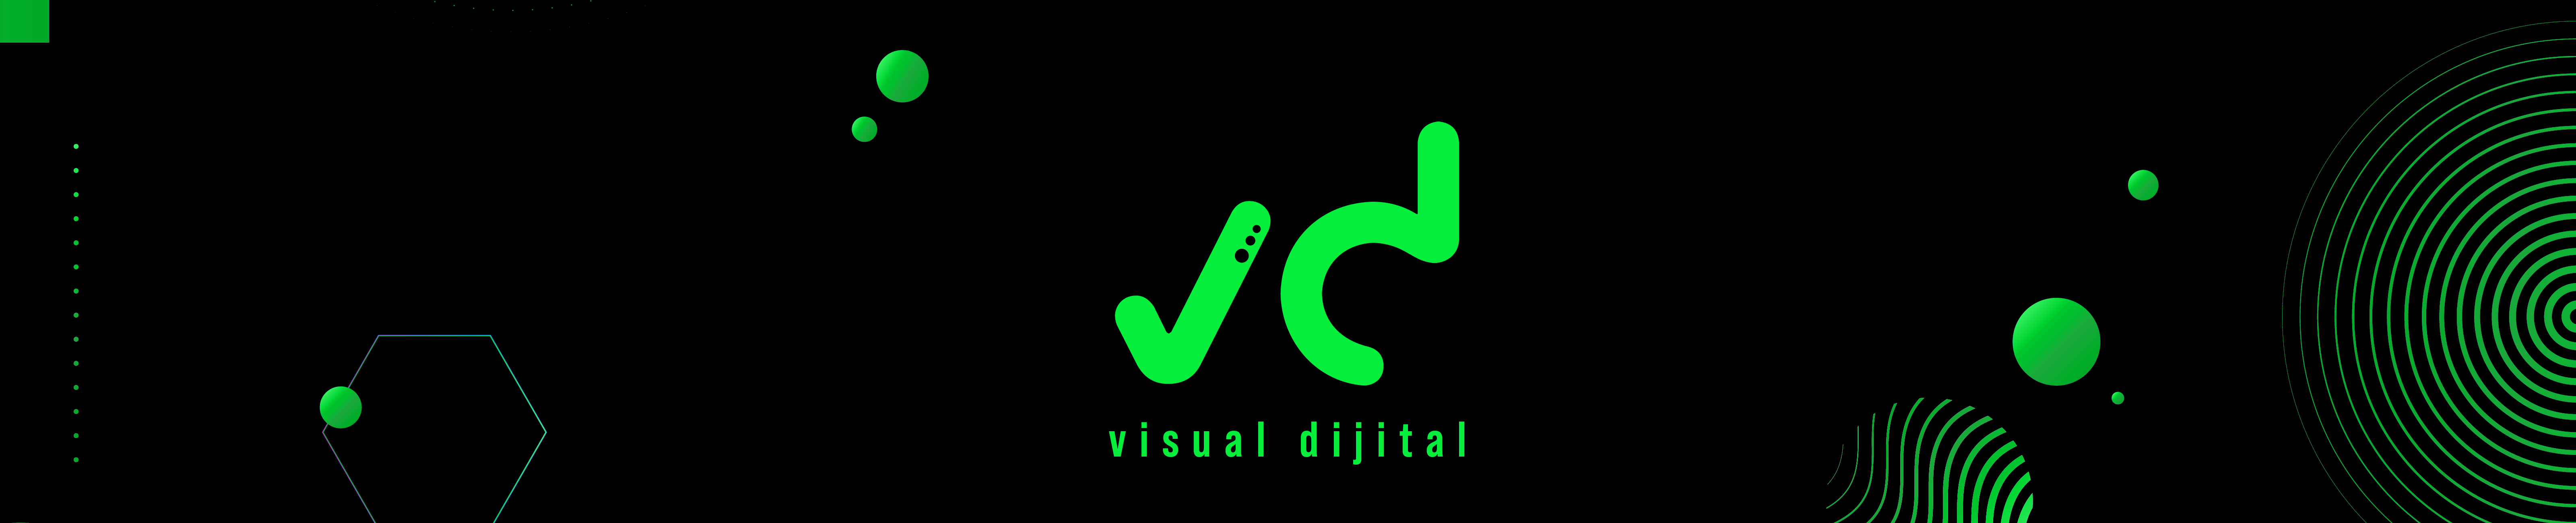 Баннер профиля Visual Dijital